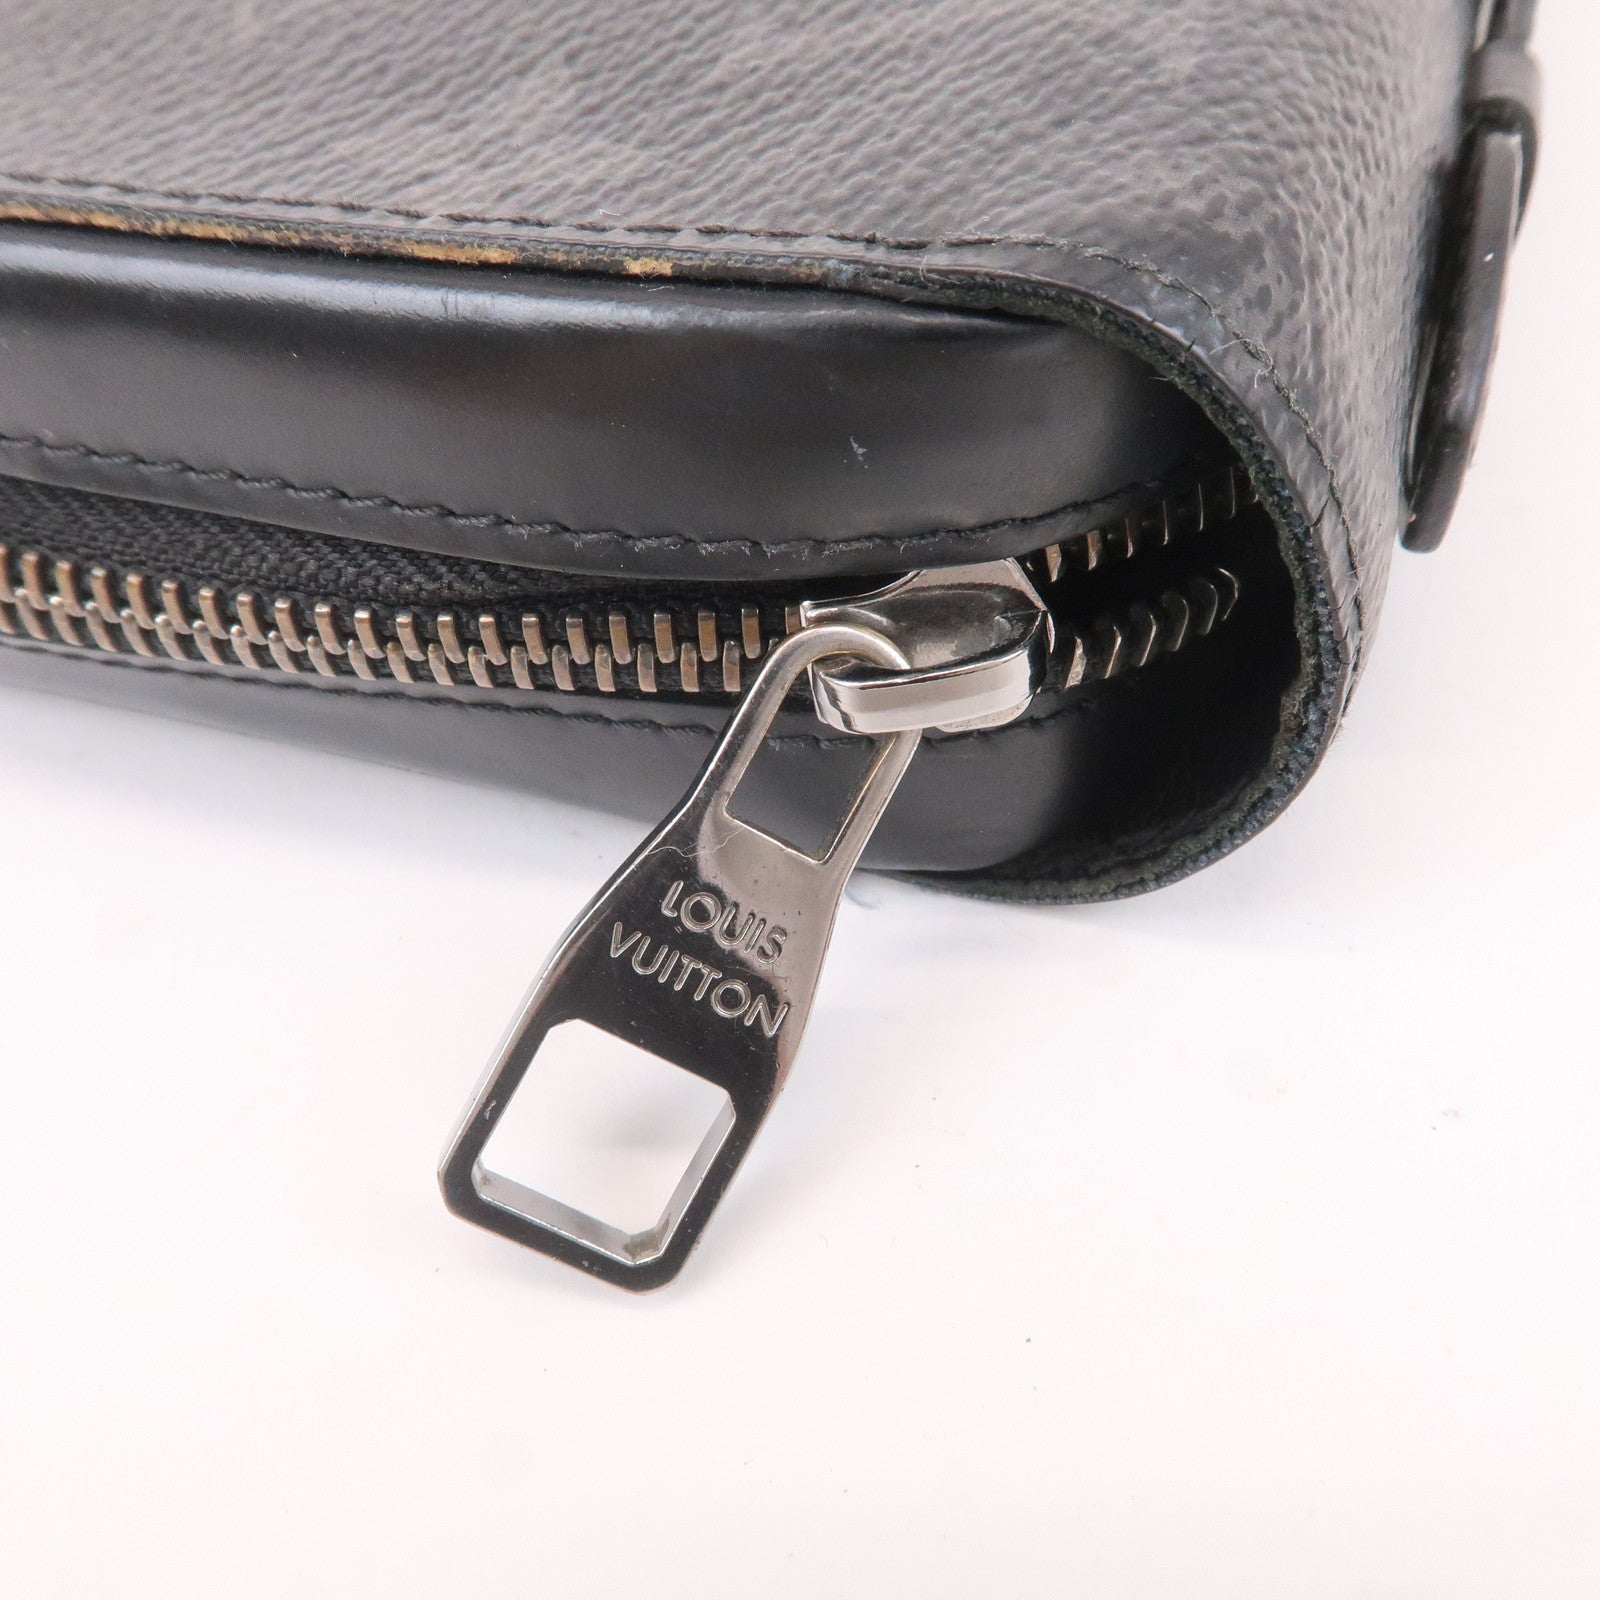 Louis Vuitton Zippy Xl Wallet (WALLET ZIPPY XL, M61698)